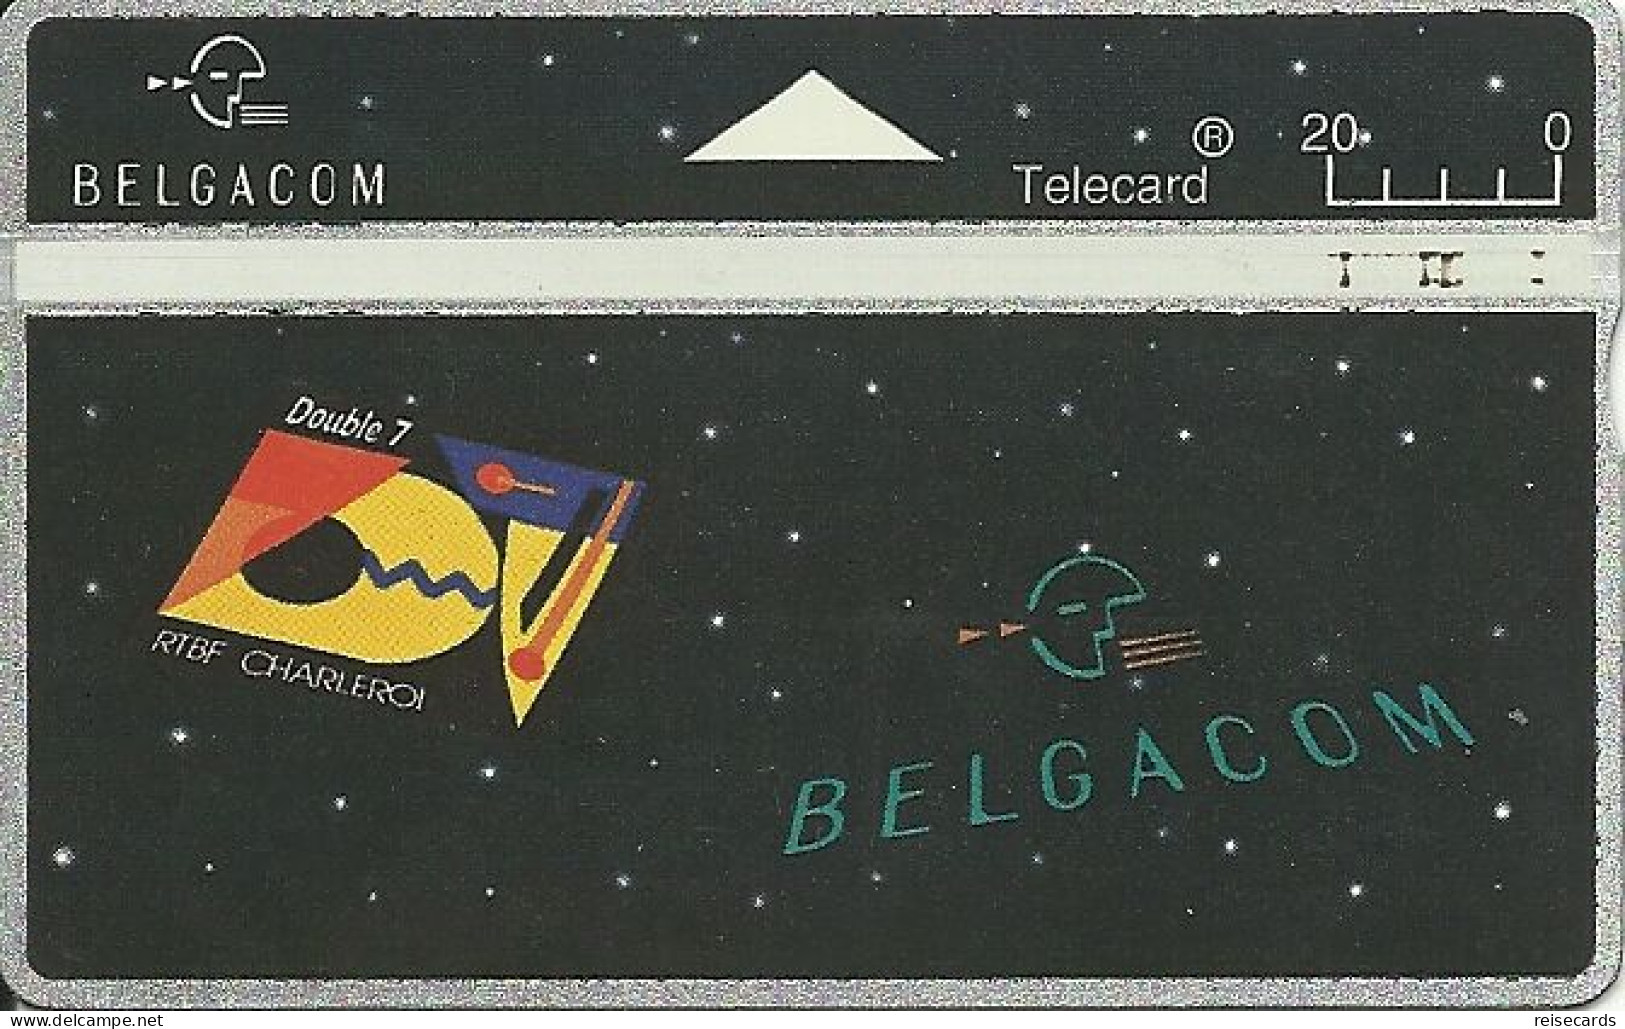 Belgium: Belgacom: 312A Double 7, RTBF Charleroi - Sin Chip